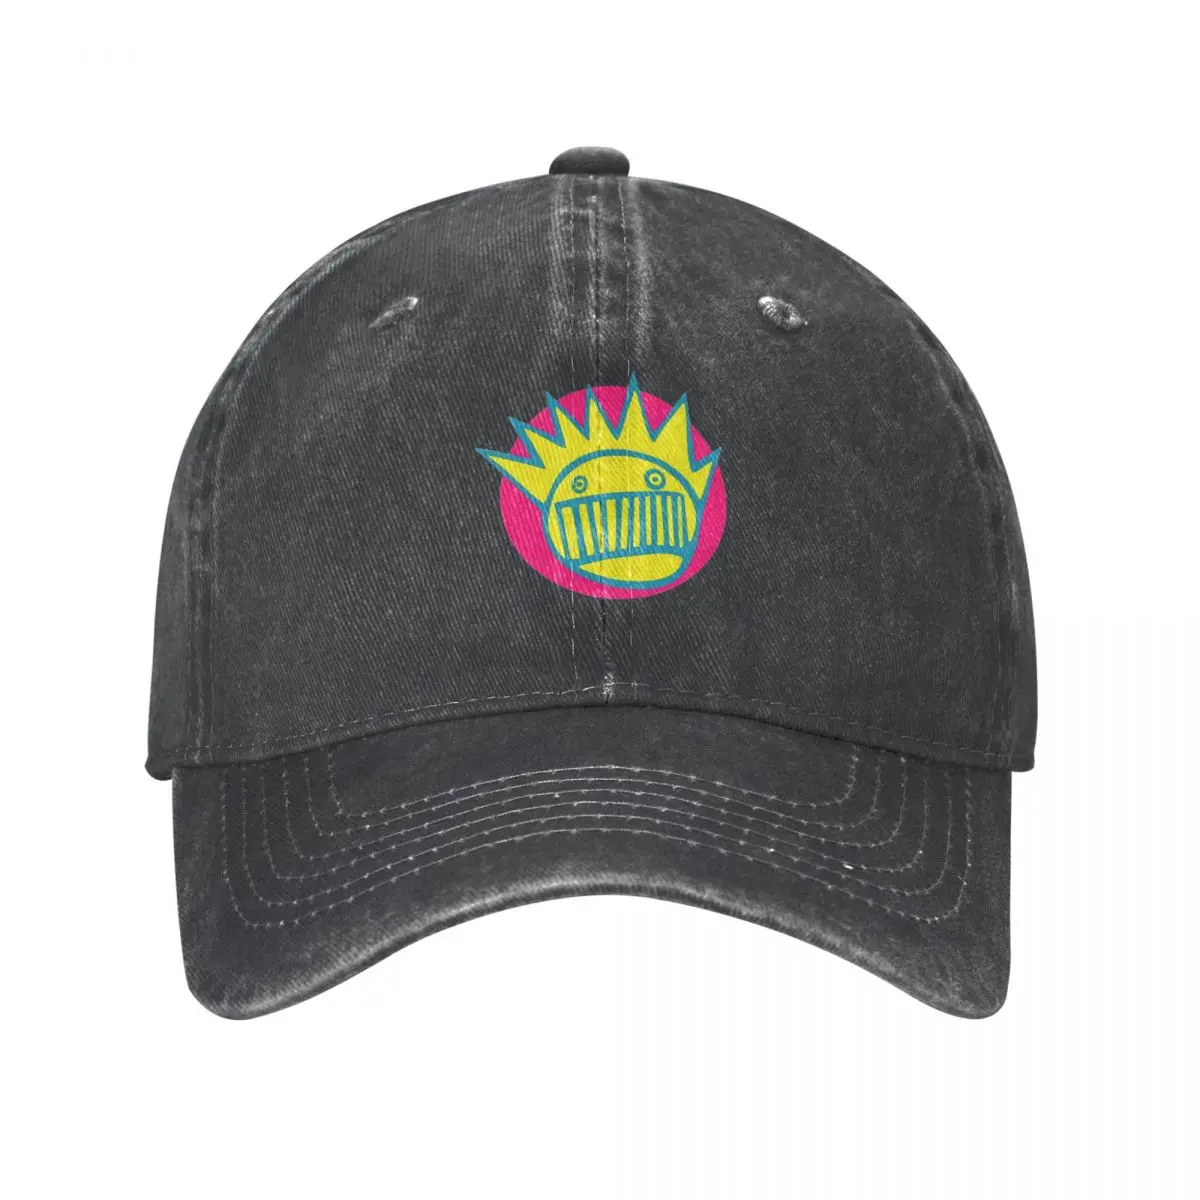 BEST SELLER - WeEn Merchandise Baseball Caps Denim Fabric Hats Outdoor Adjustable Casquette Streetwear Baseball Cowboy Hat